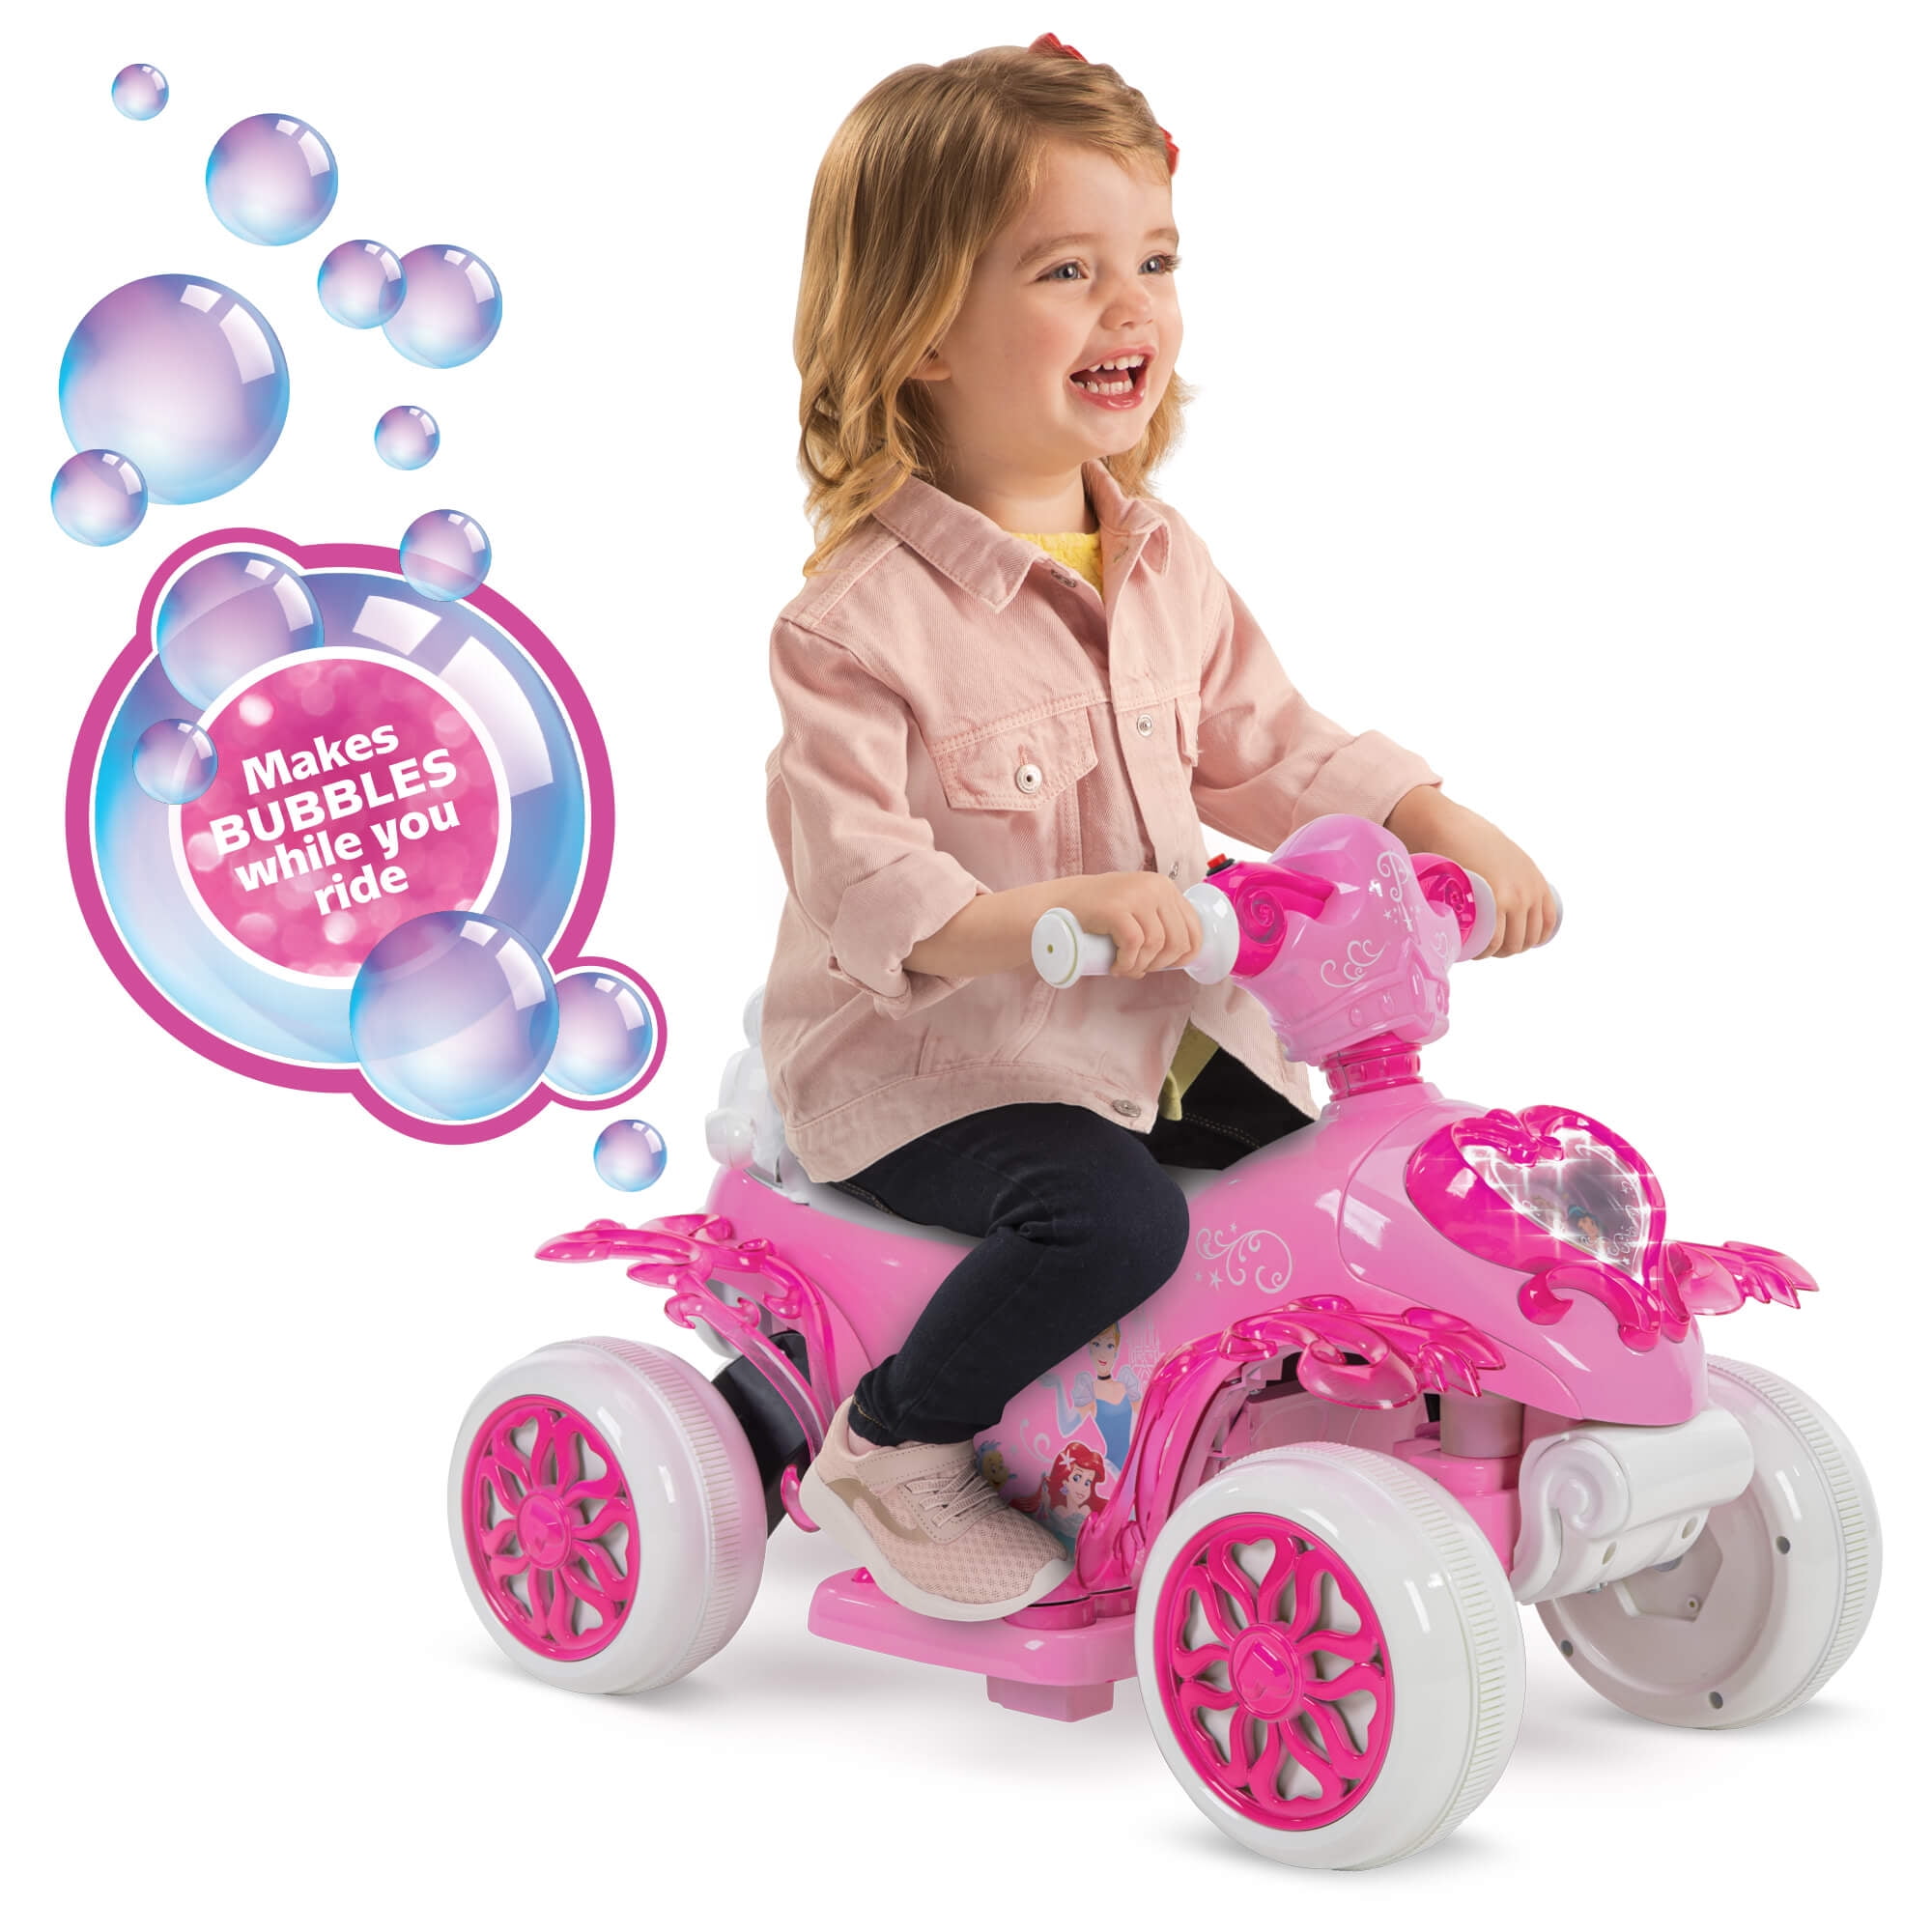 Disney Princess Electric RideOn Quad Toy by Huffy